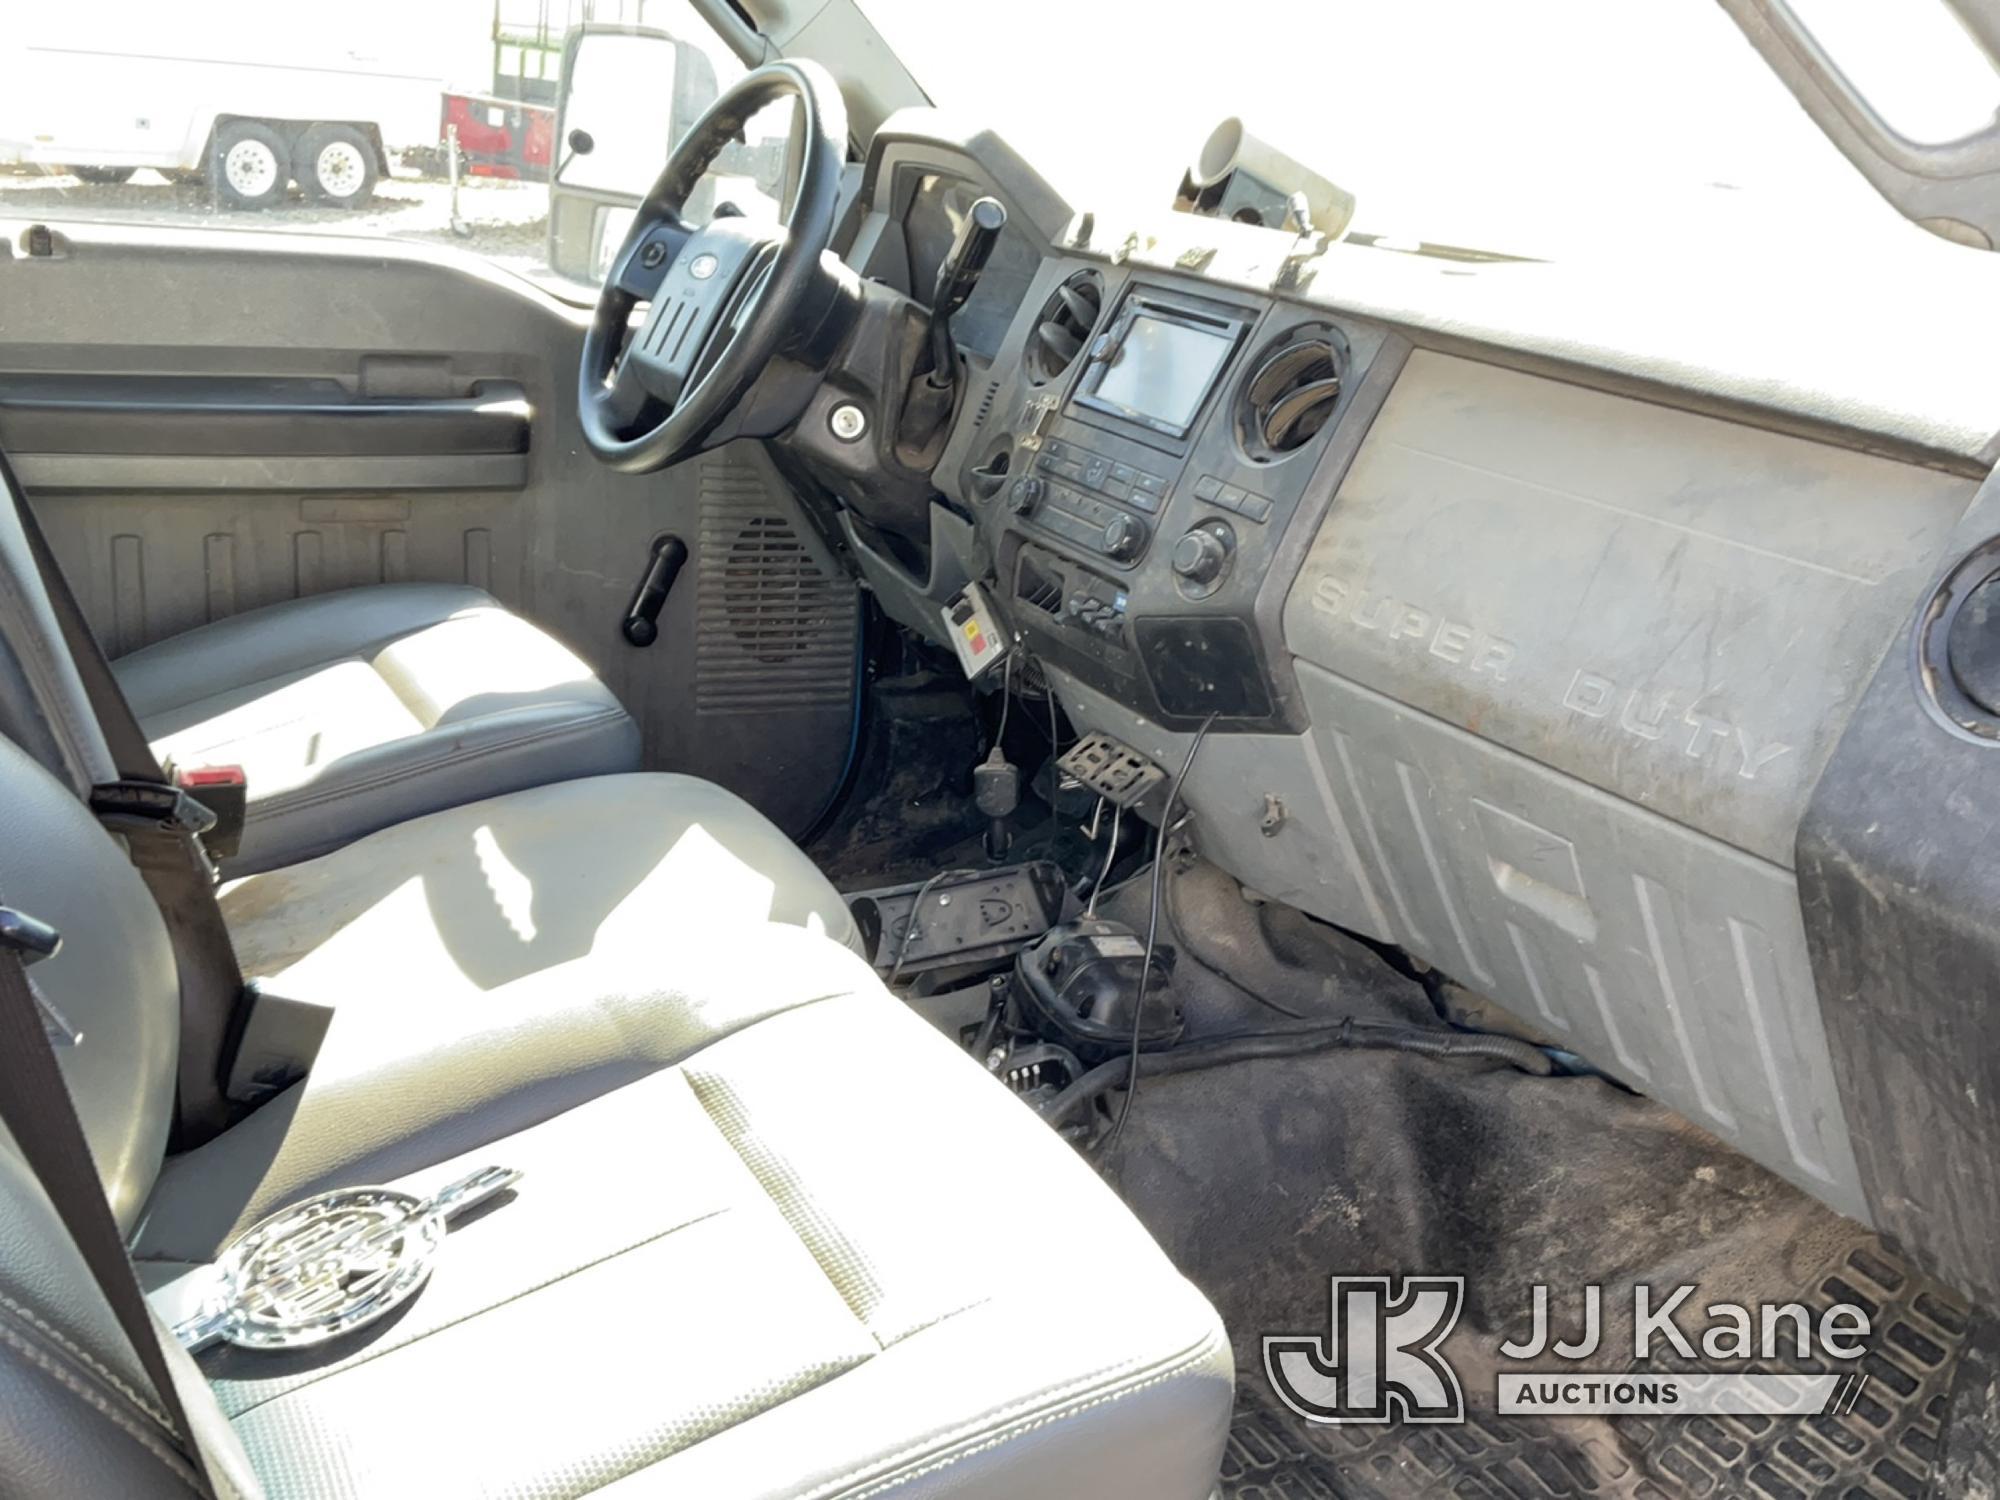 (Dixon, CA) 2011 Ford F550 4x4 Crew-Cab Pickup Truck Not Running, Cranks Does Not Start, Hood Damage